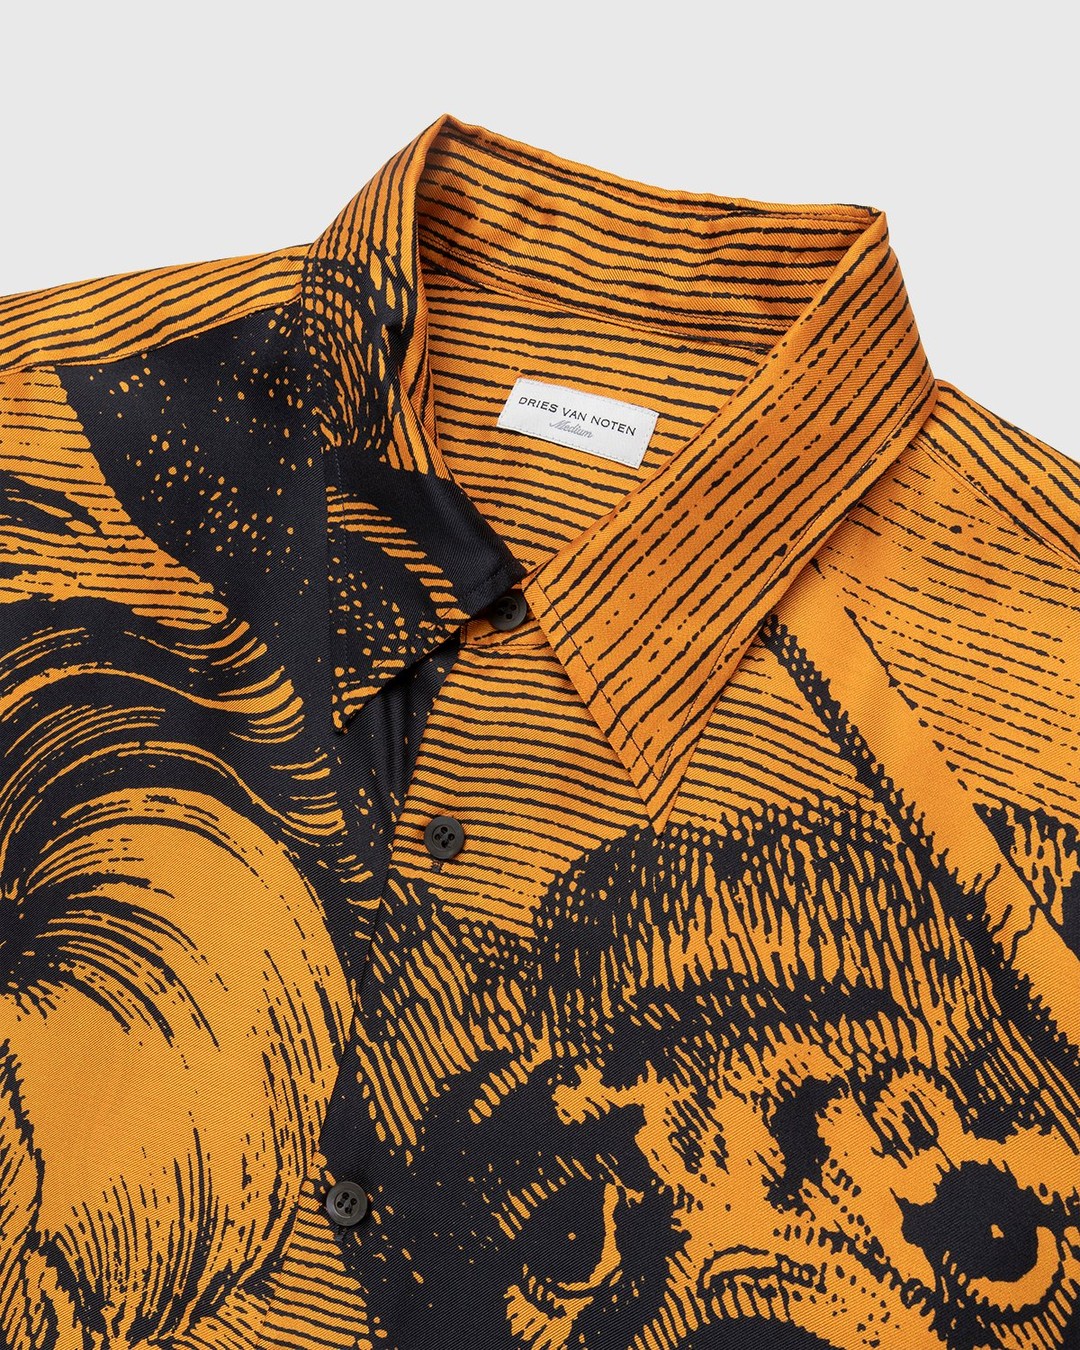 Dries van Noten – Cassidye Shirt Orange - Shortsleeve Shirts - Orange - Image 5